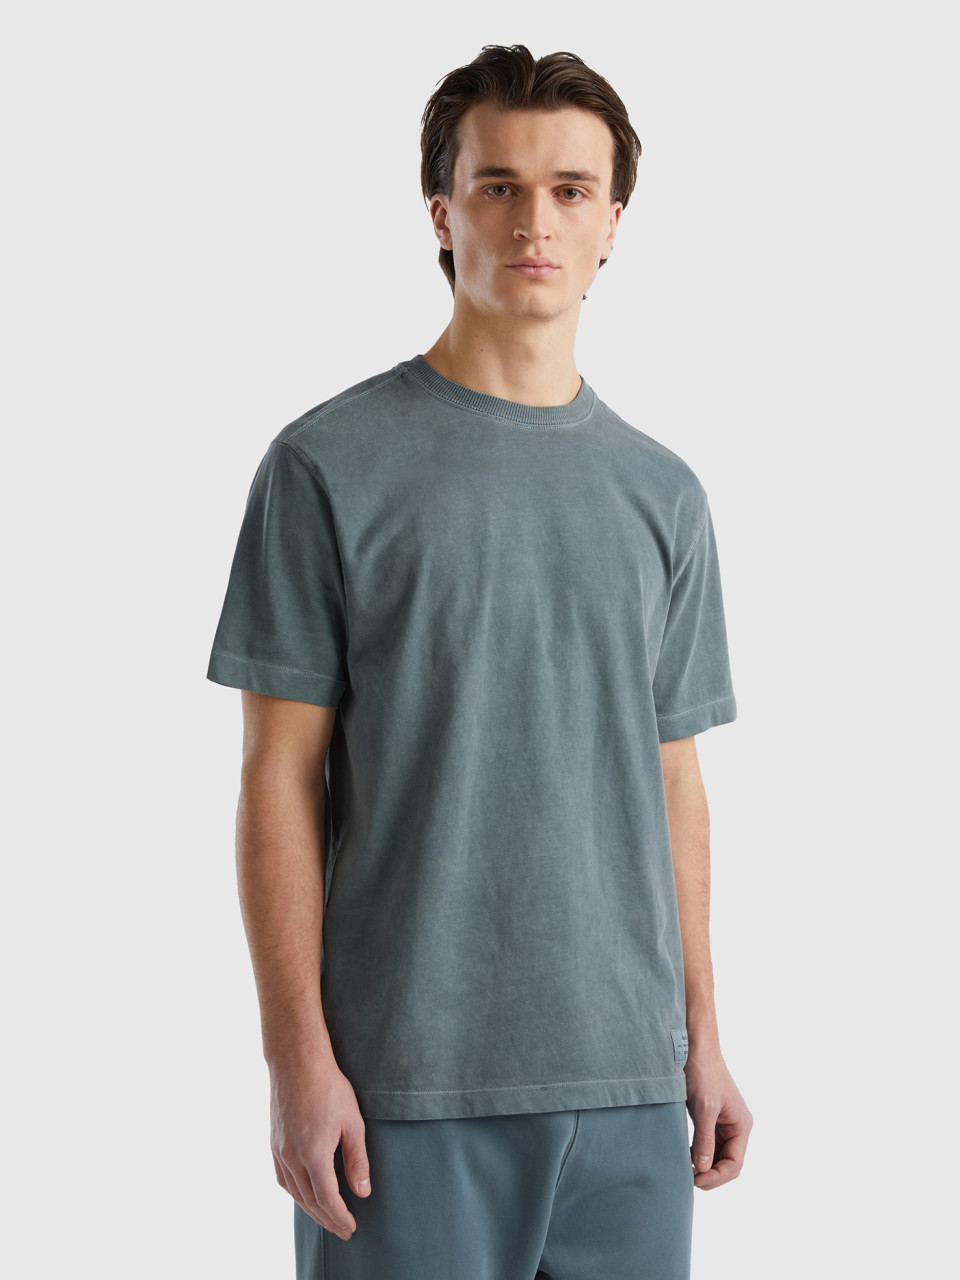 Benetton, 100% Organic Cotton Crew Neck T-shirt, Dark Gray, Men